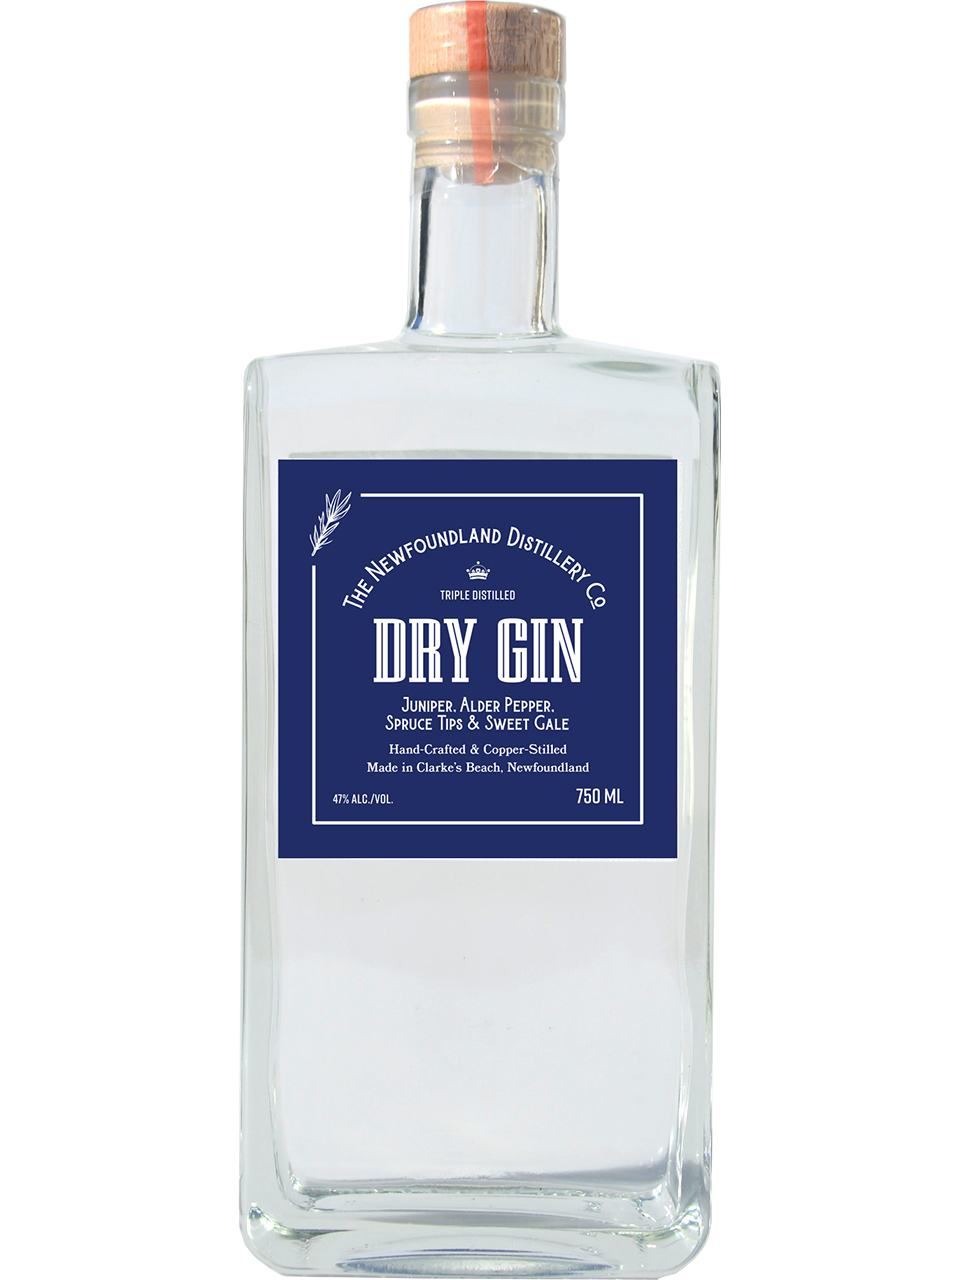 The Newfoundland Distillery Dry Gin